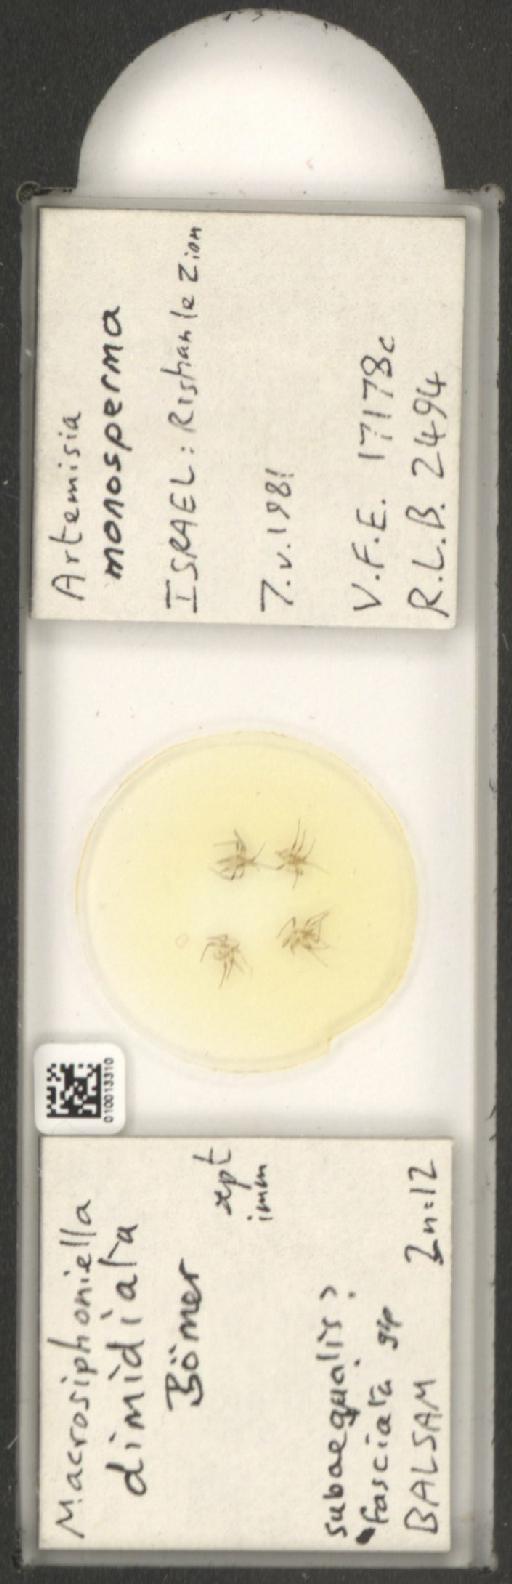 Macrosiphoniella dimidiata Börner, 1942 - 010013310_112659_1094720